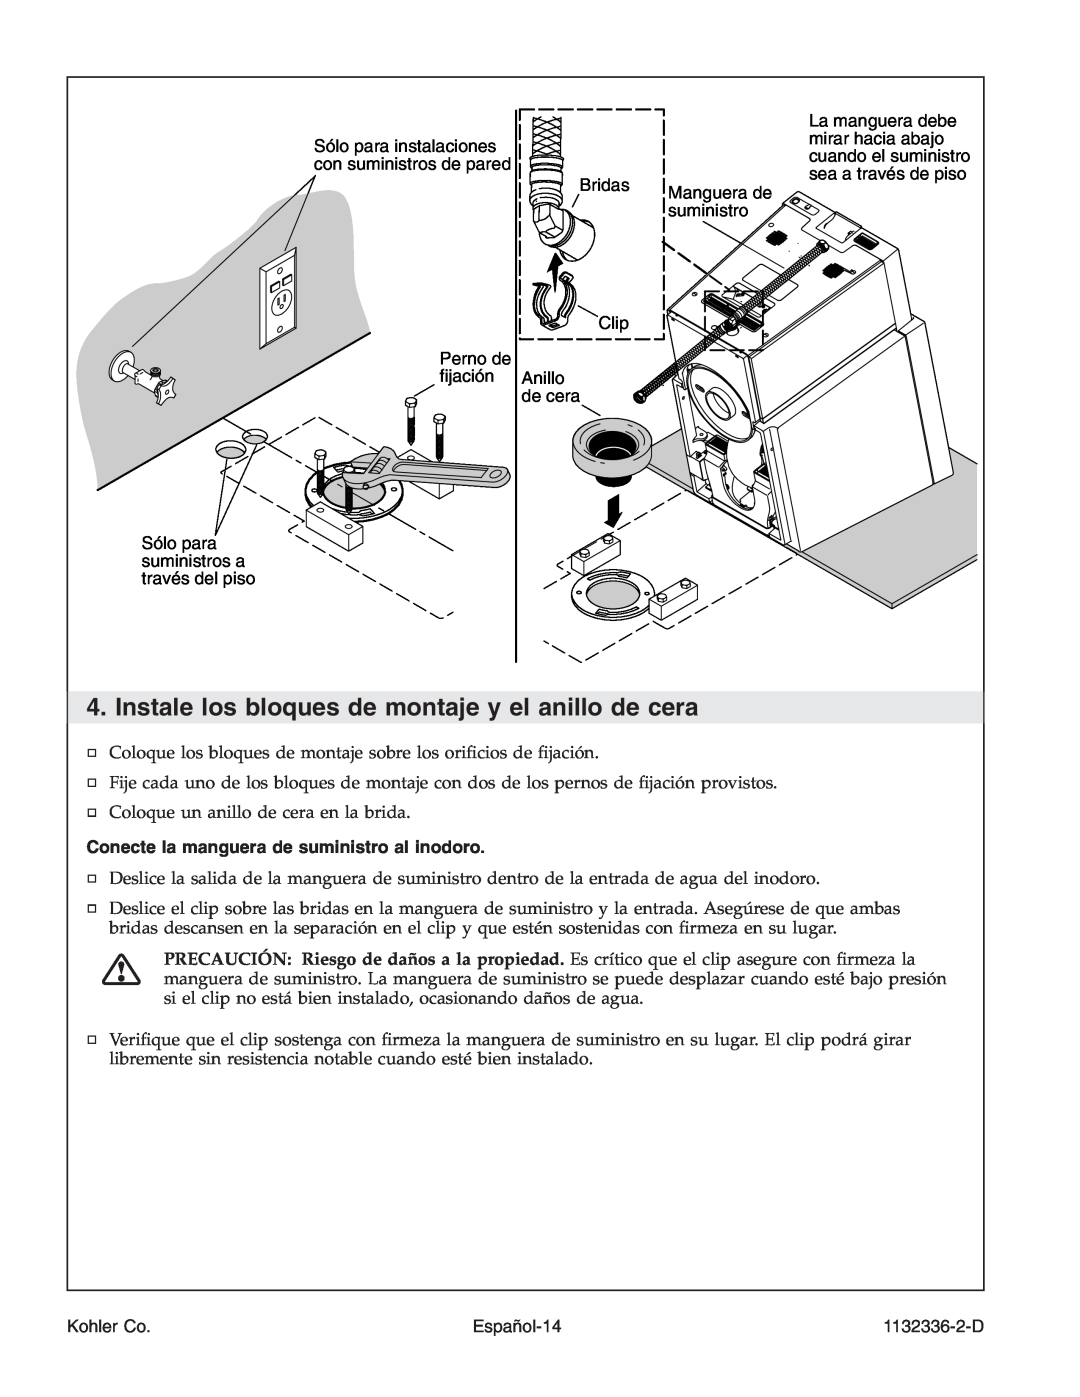 Kohler K-3900 manual Conecte la manguera de suministro al inodoro, Español-14, Kohler Co, 1132336-2-D 